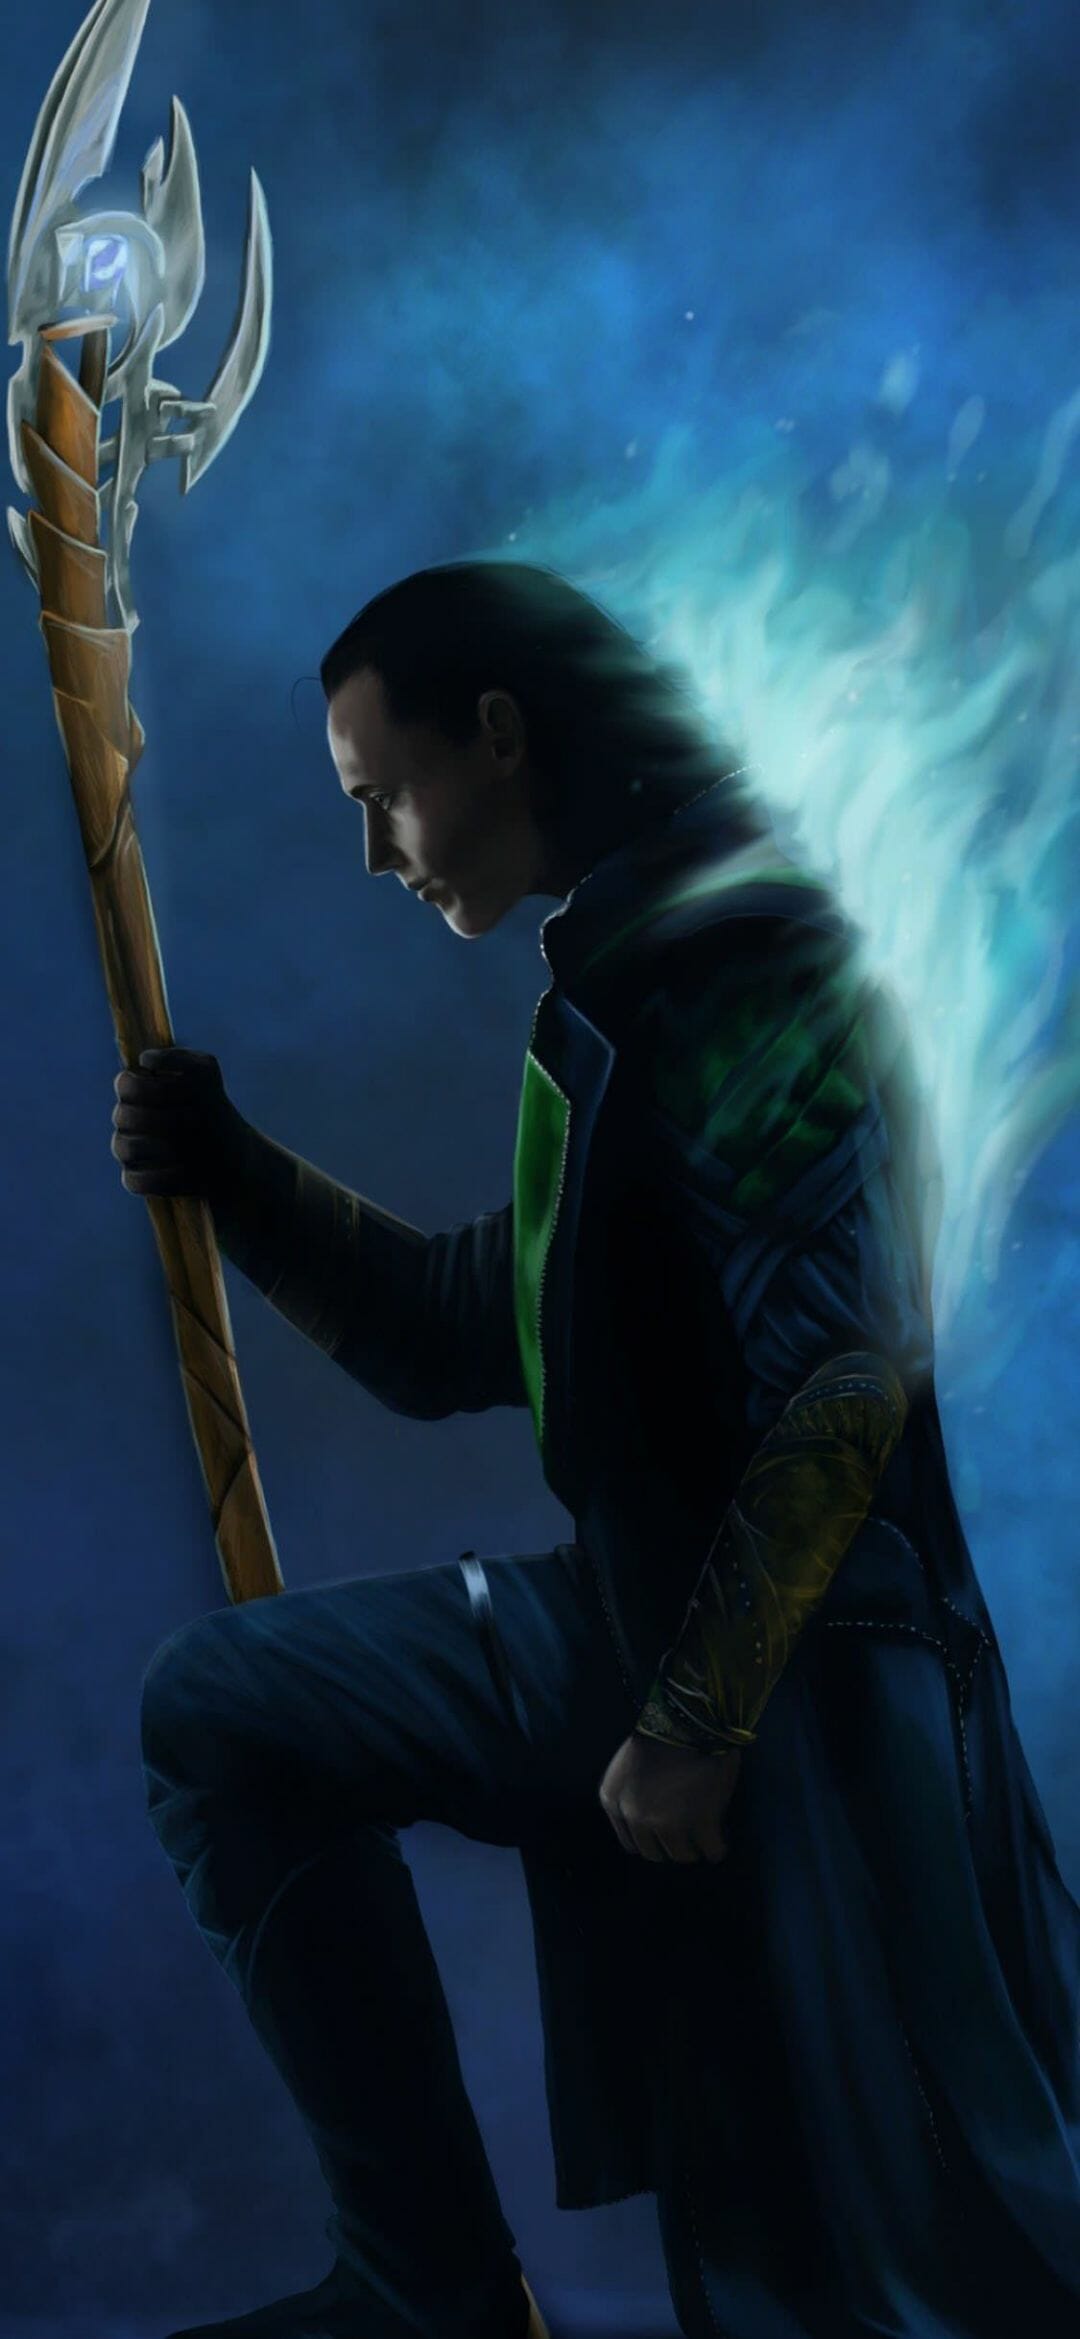 A man with blue flames holding an axe - Loki